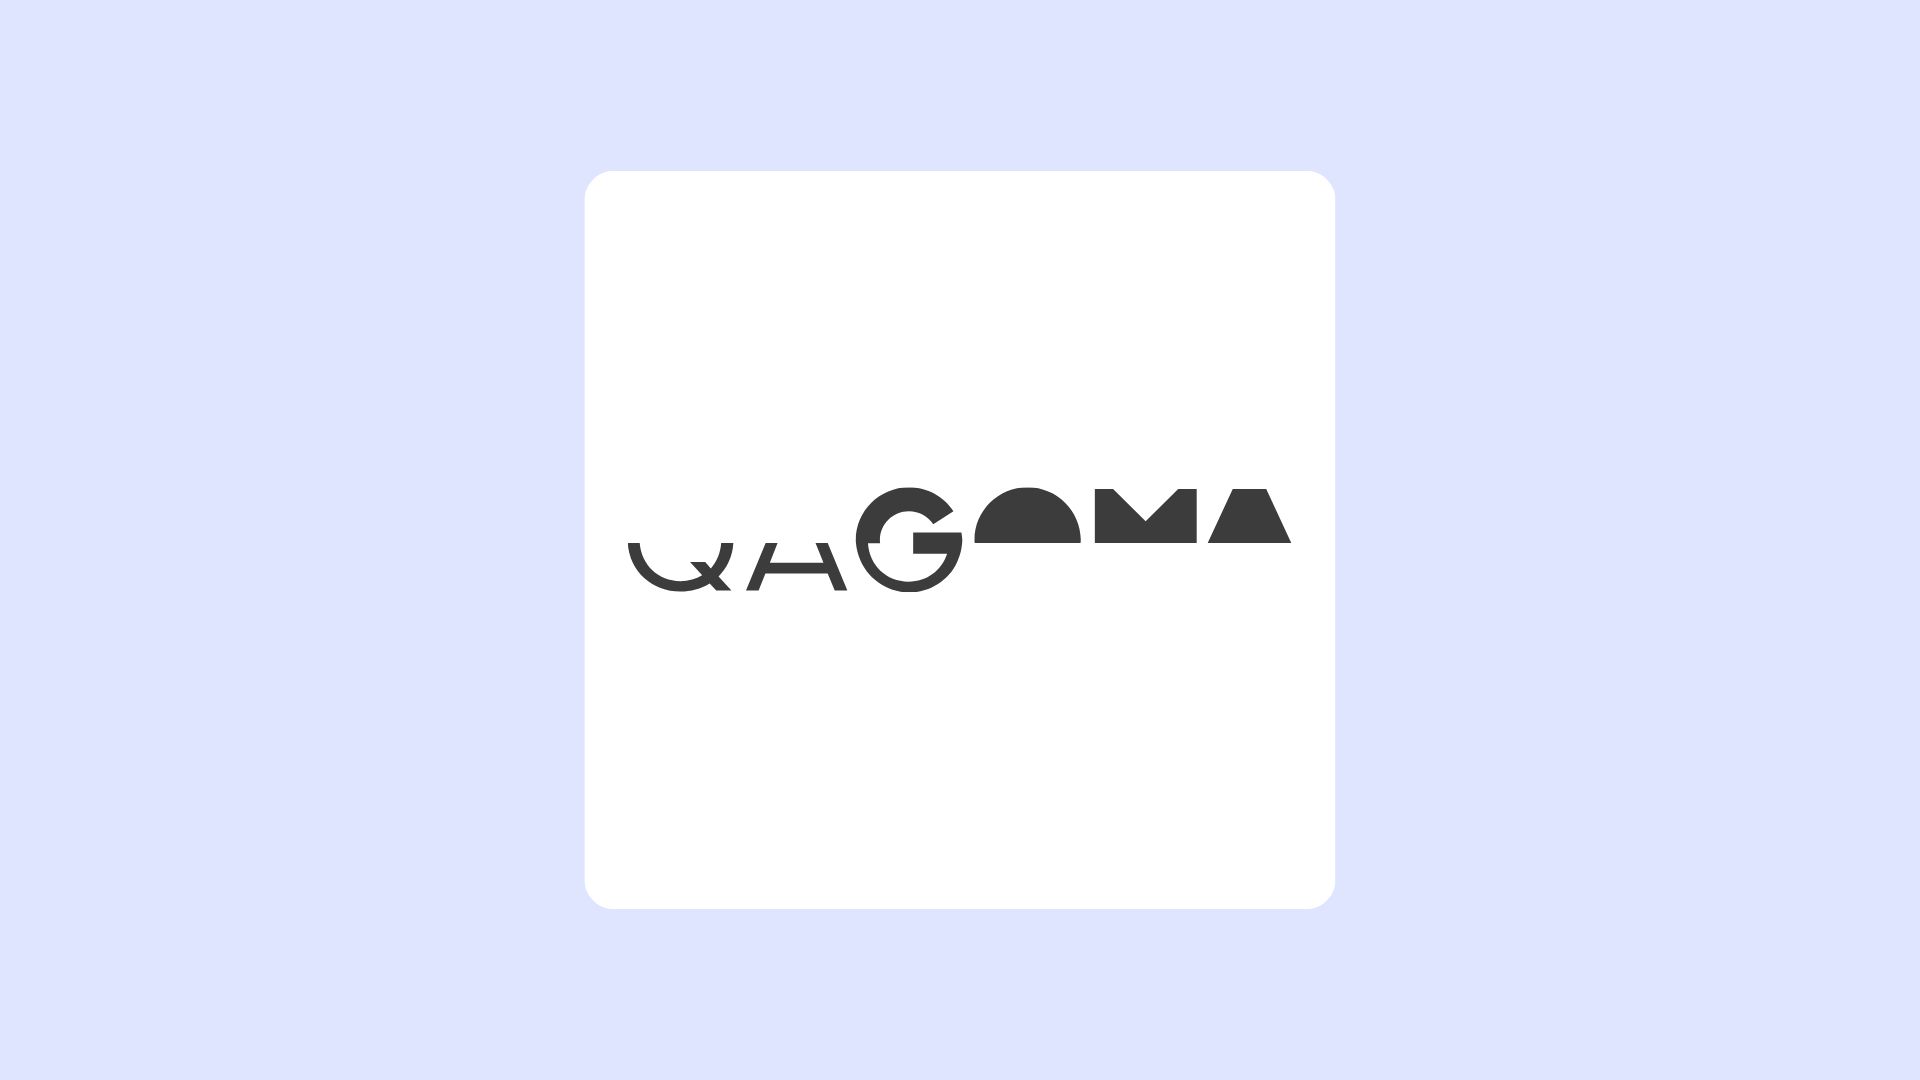 fotoware-qagoma-webinar-thumbnail